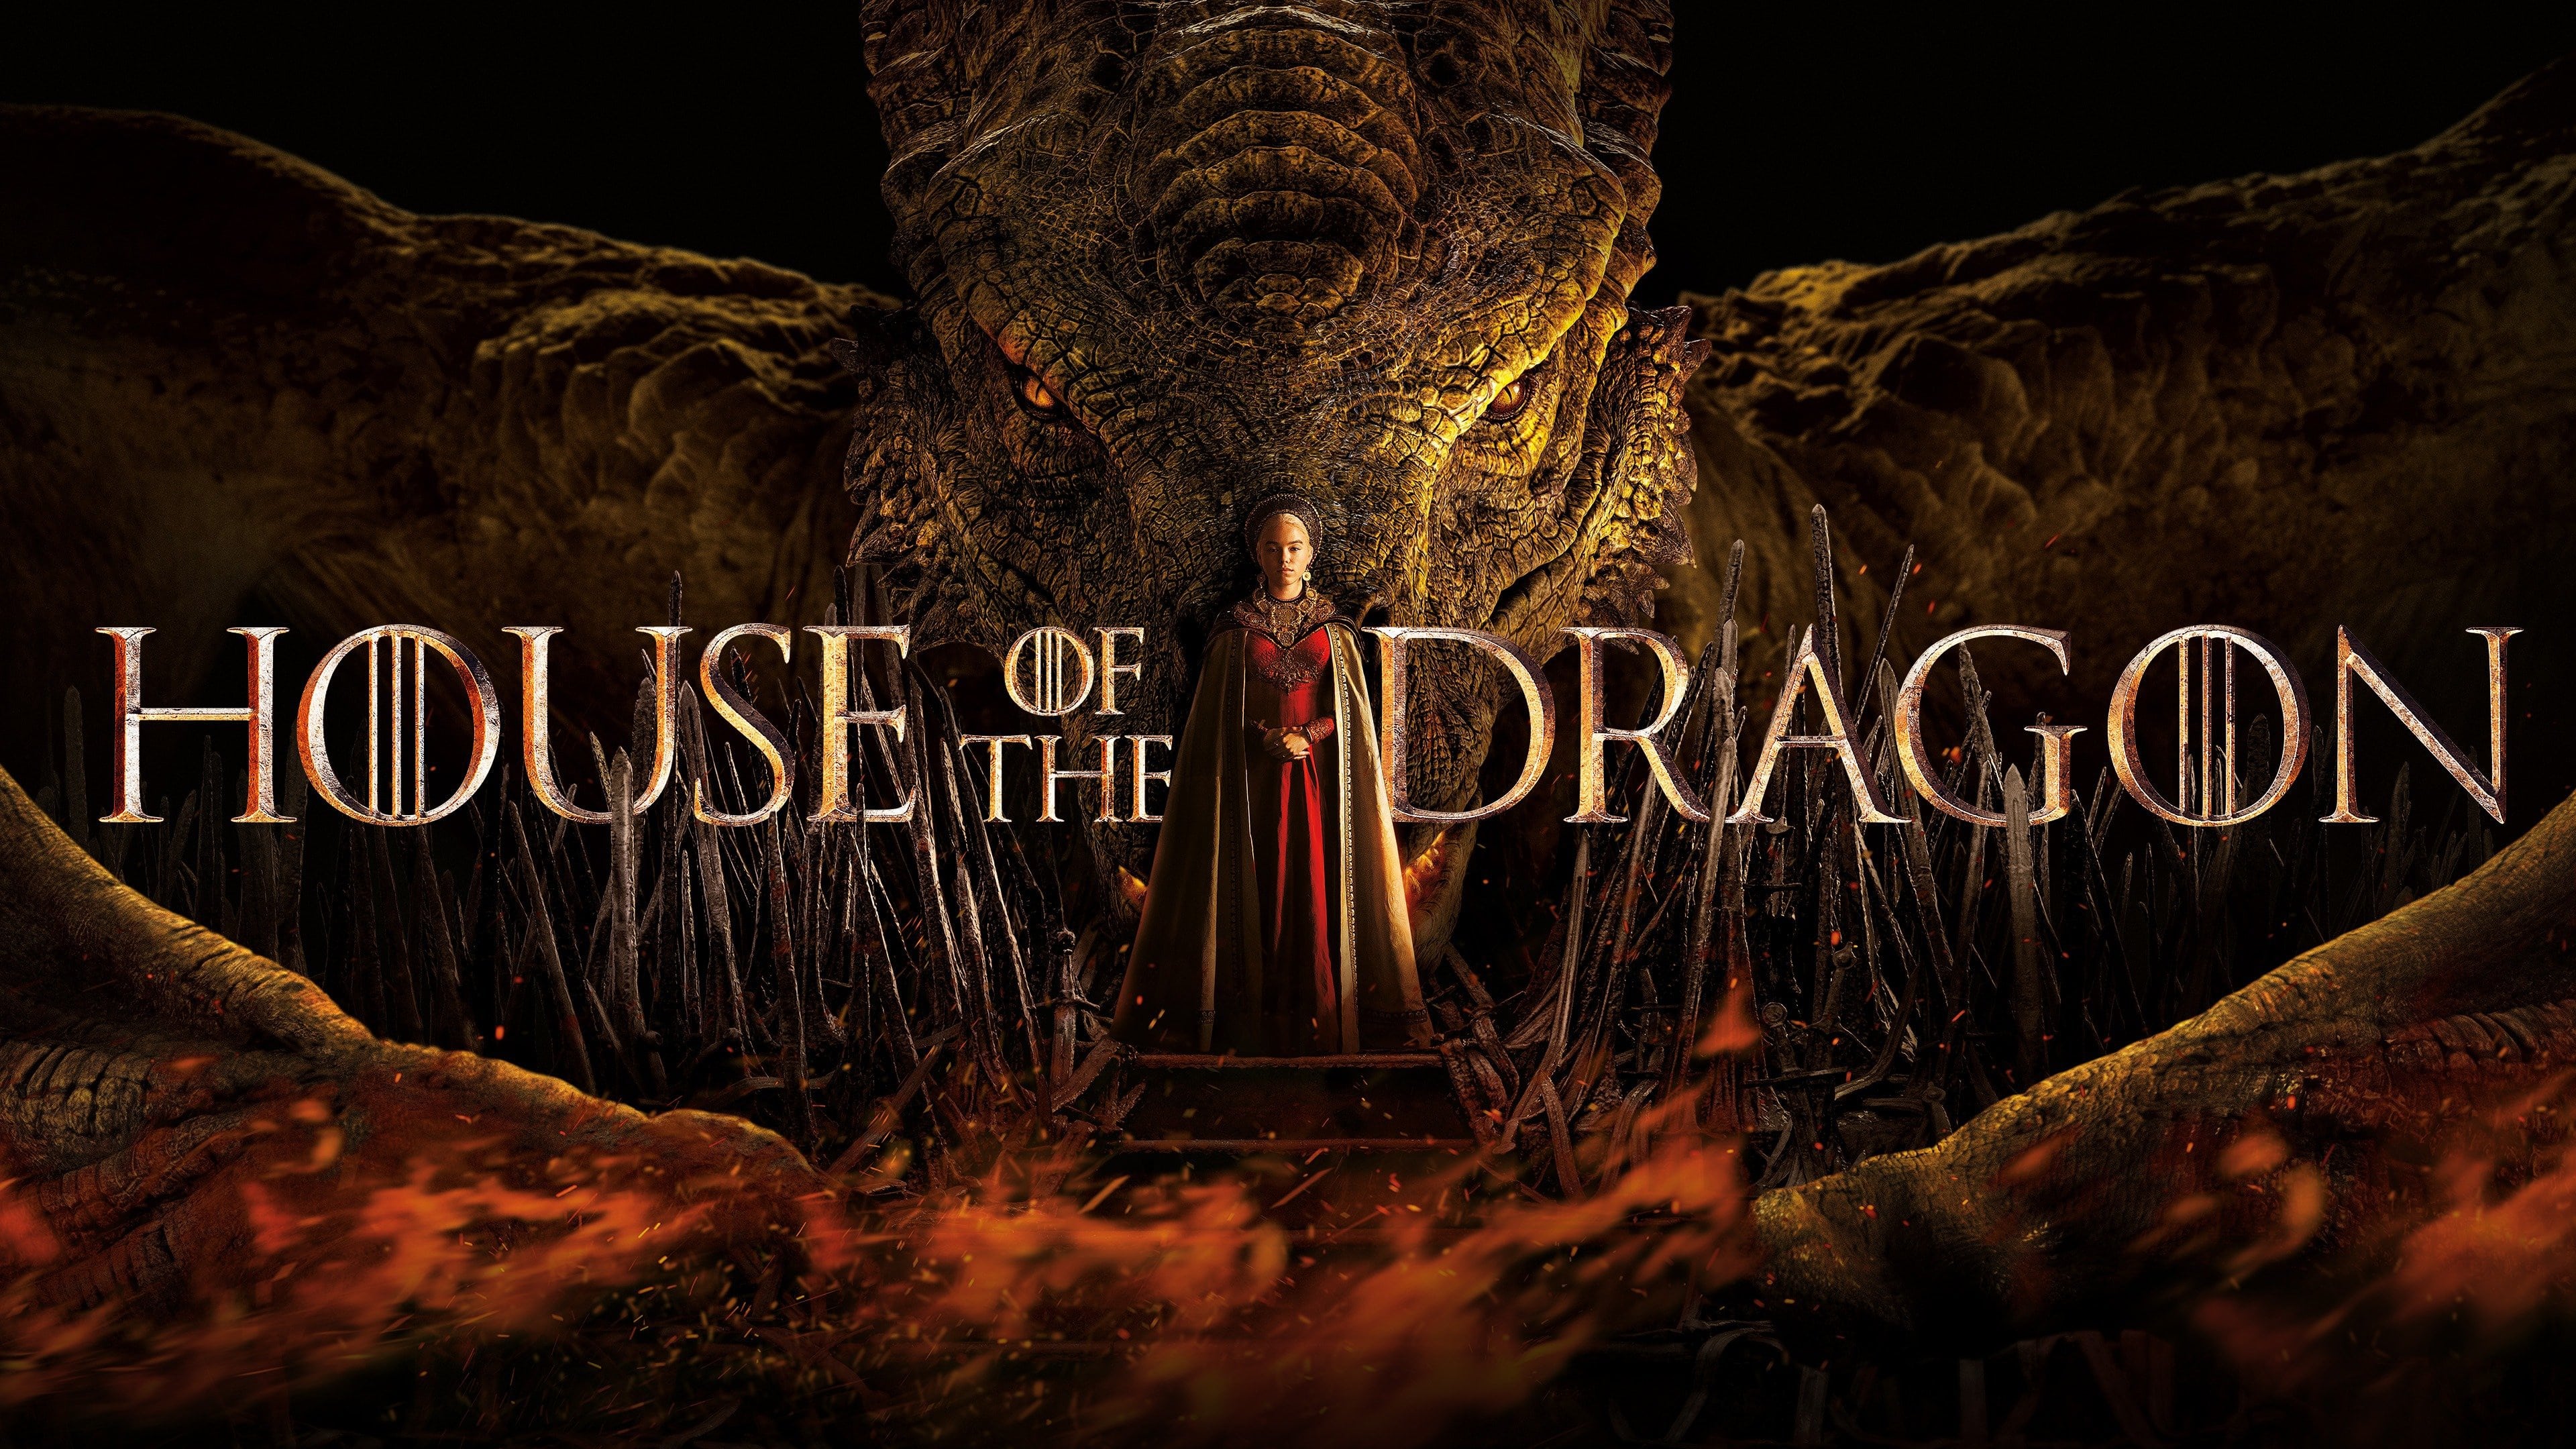 House of the Dragon - Season 1 Episode 4